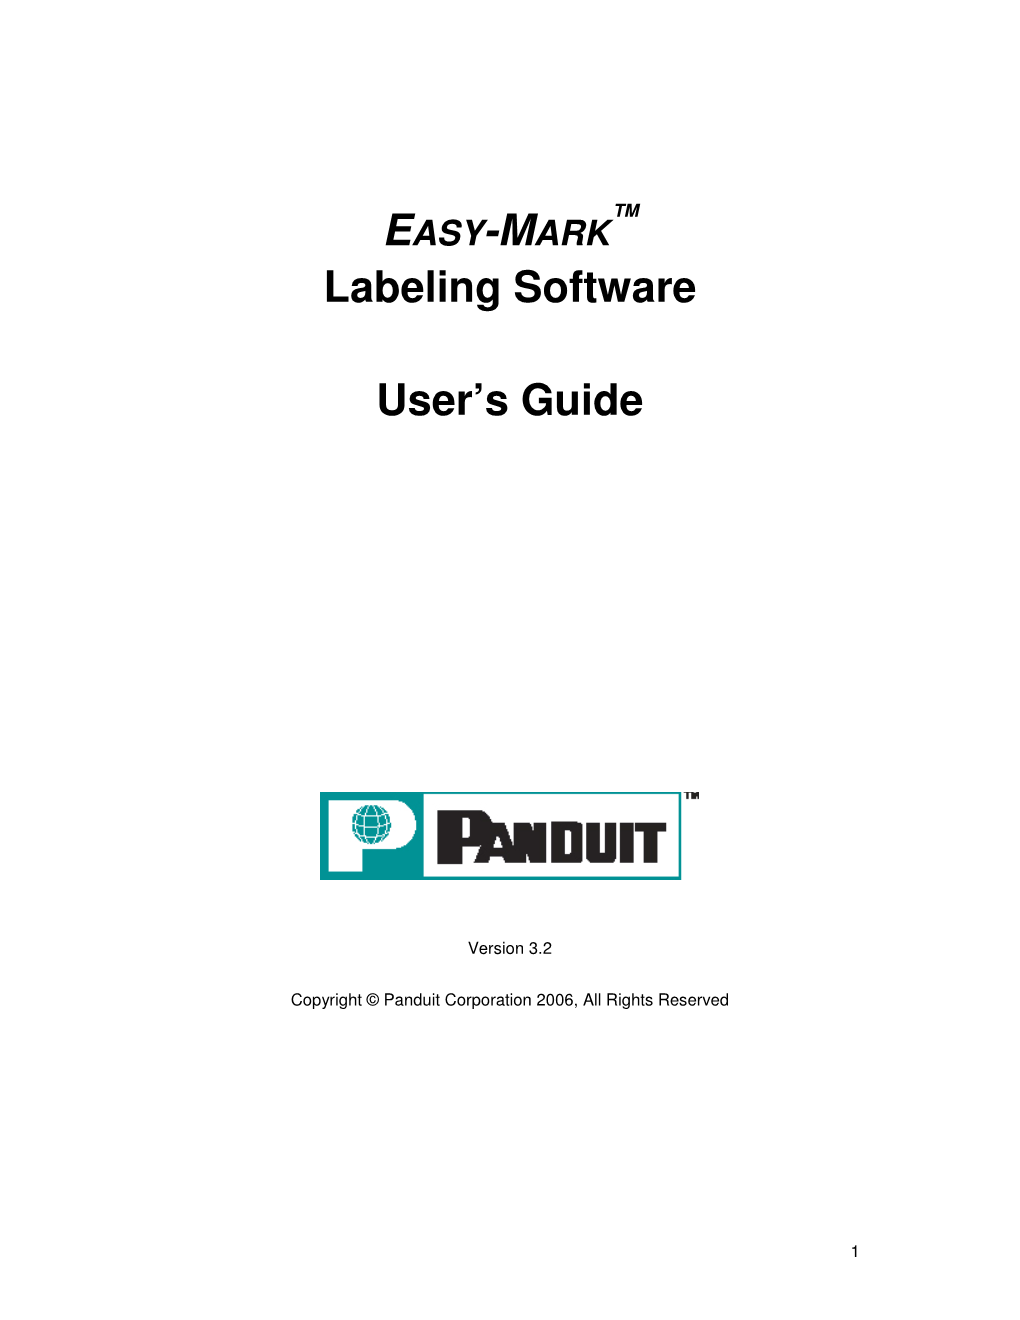 Easy-Mark Labeling Software User Manual